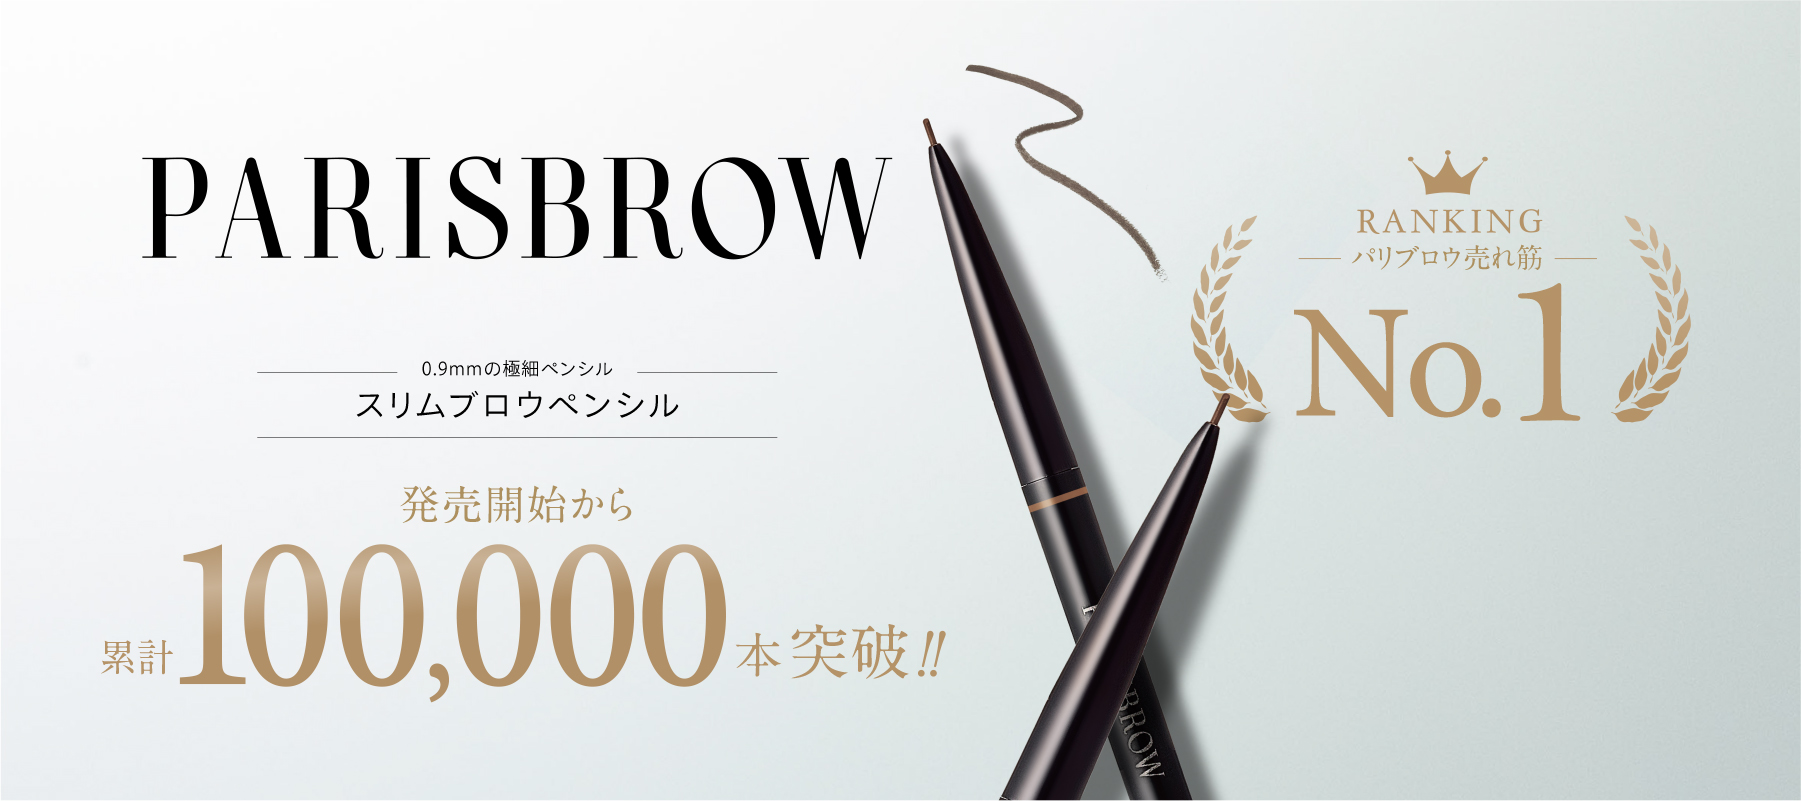 PARISBROW slim pencil 70 000 unit sold